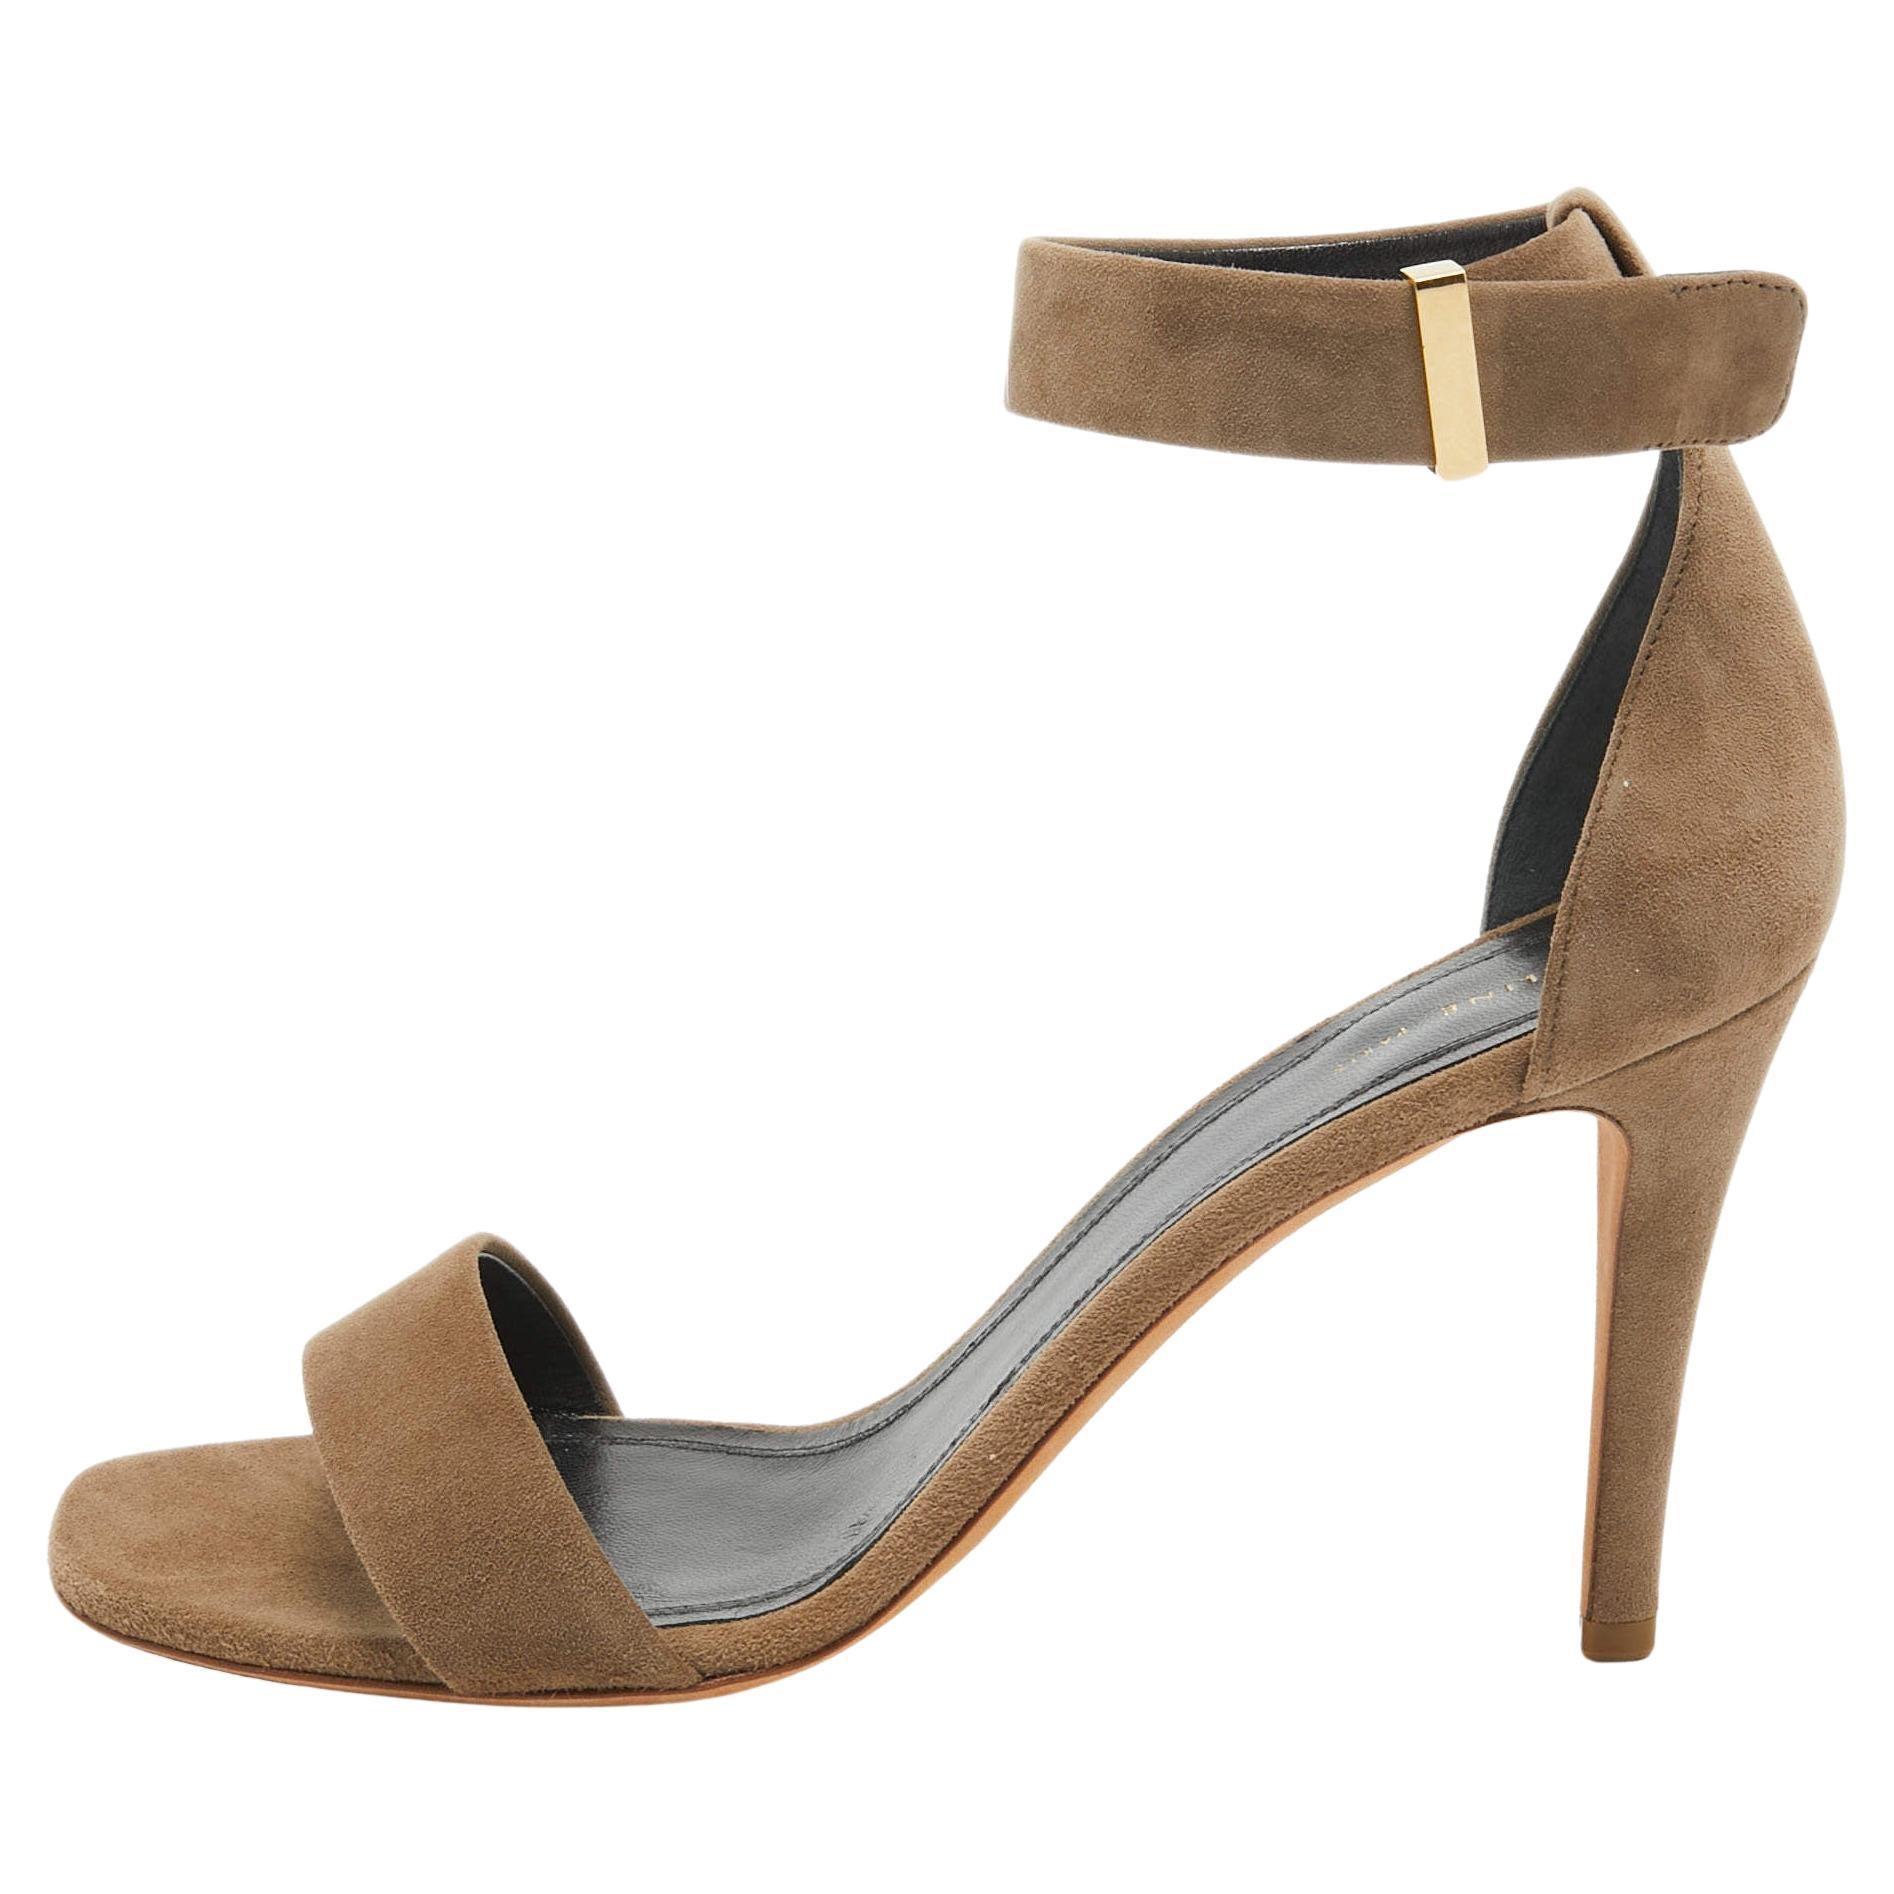 Celine Grey Suede Ankle Strap Sandals Size 38.5 For Sale